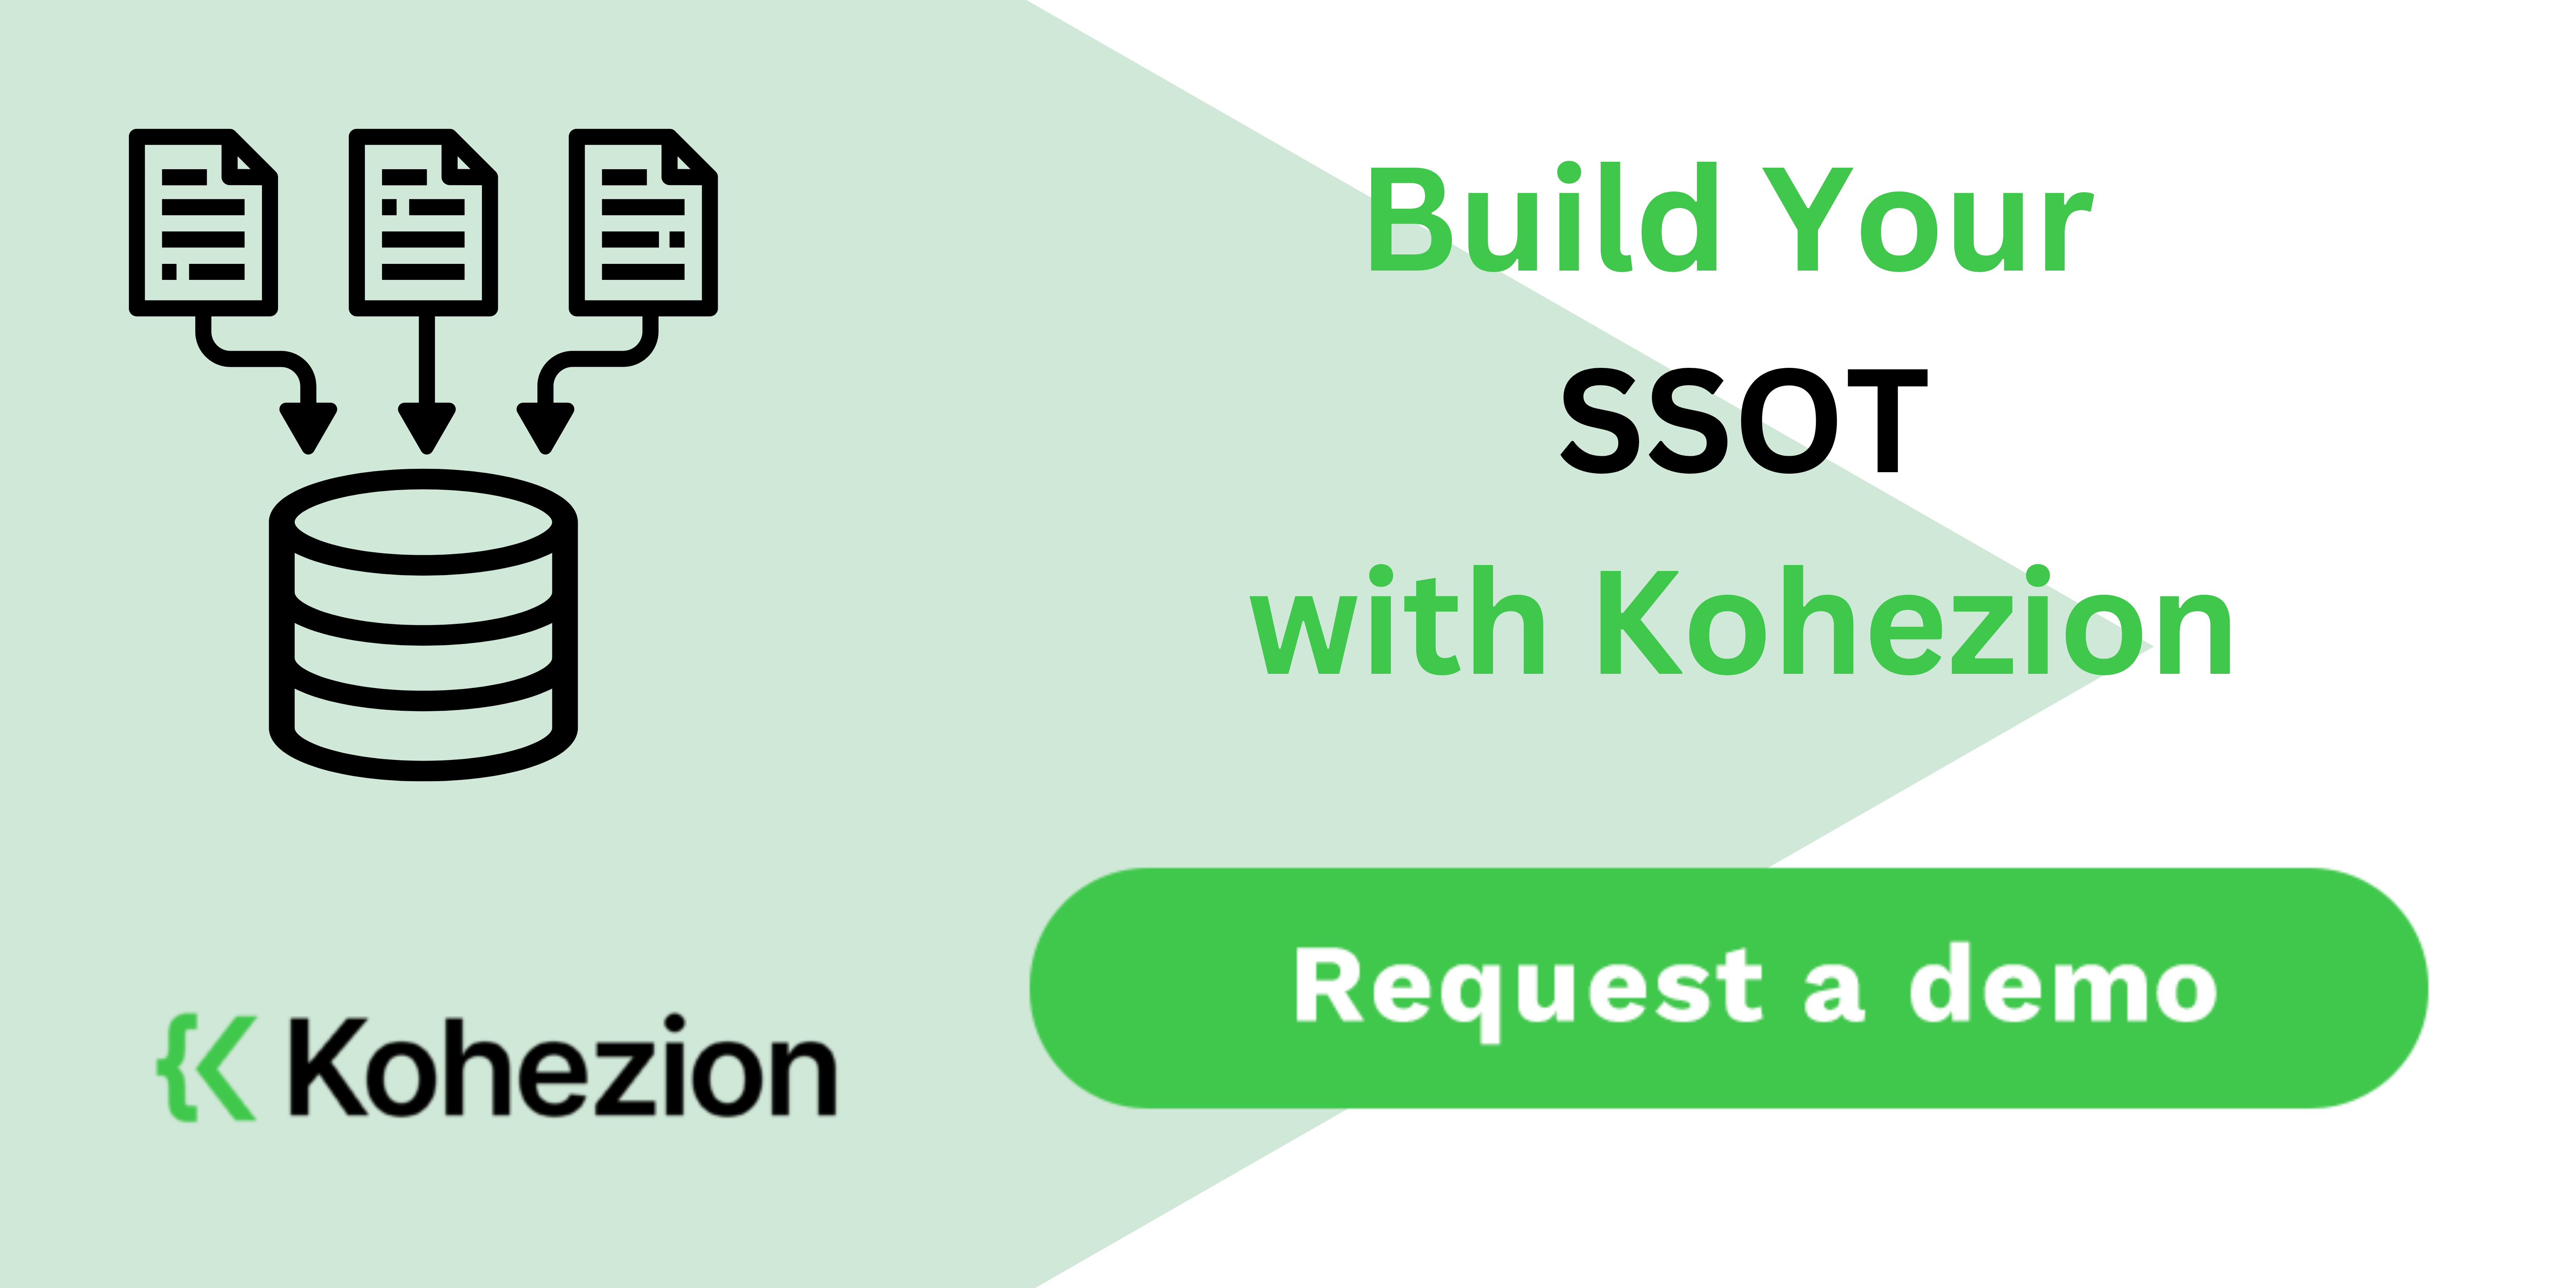 build your ssot with kohezion